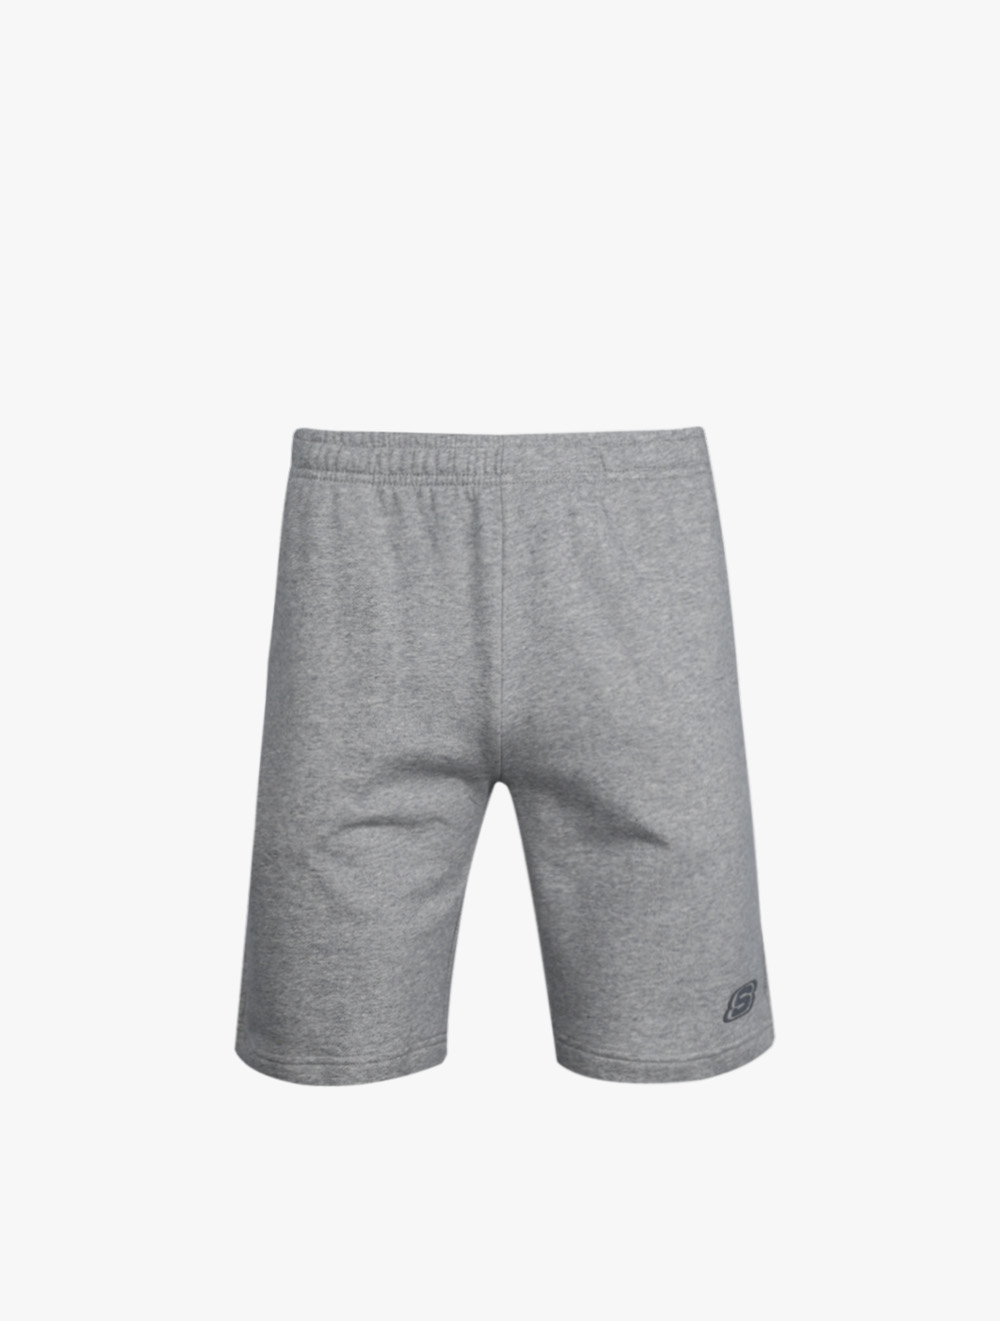 skechers shorts mens grey